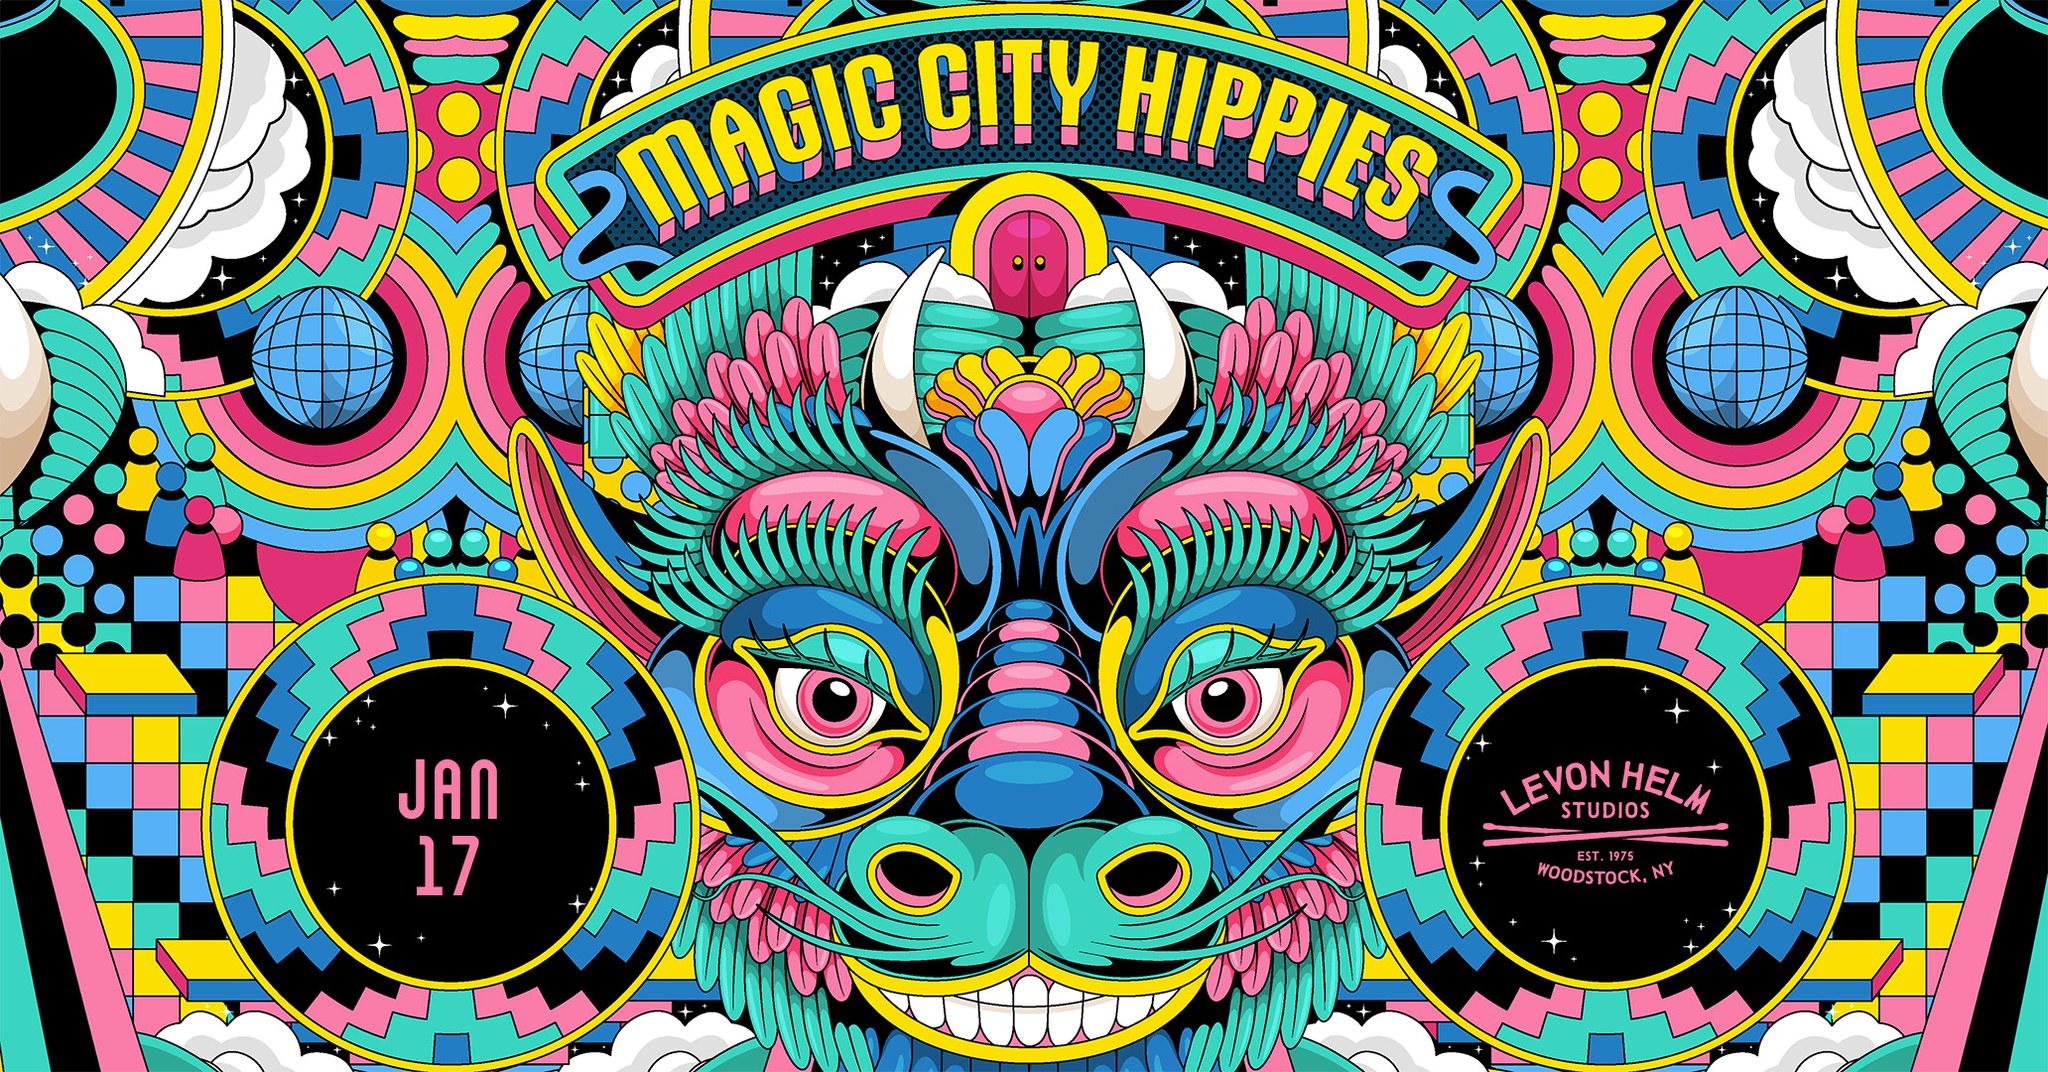 Magic City Hippies event flyer